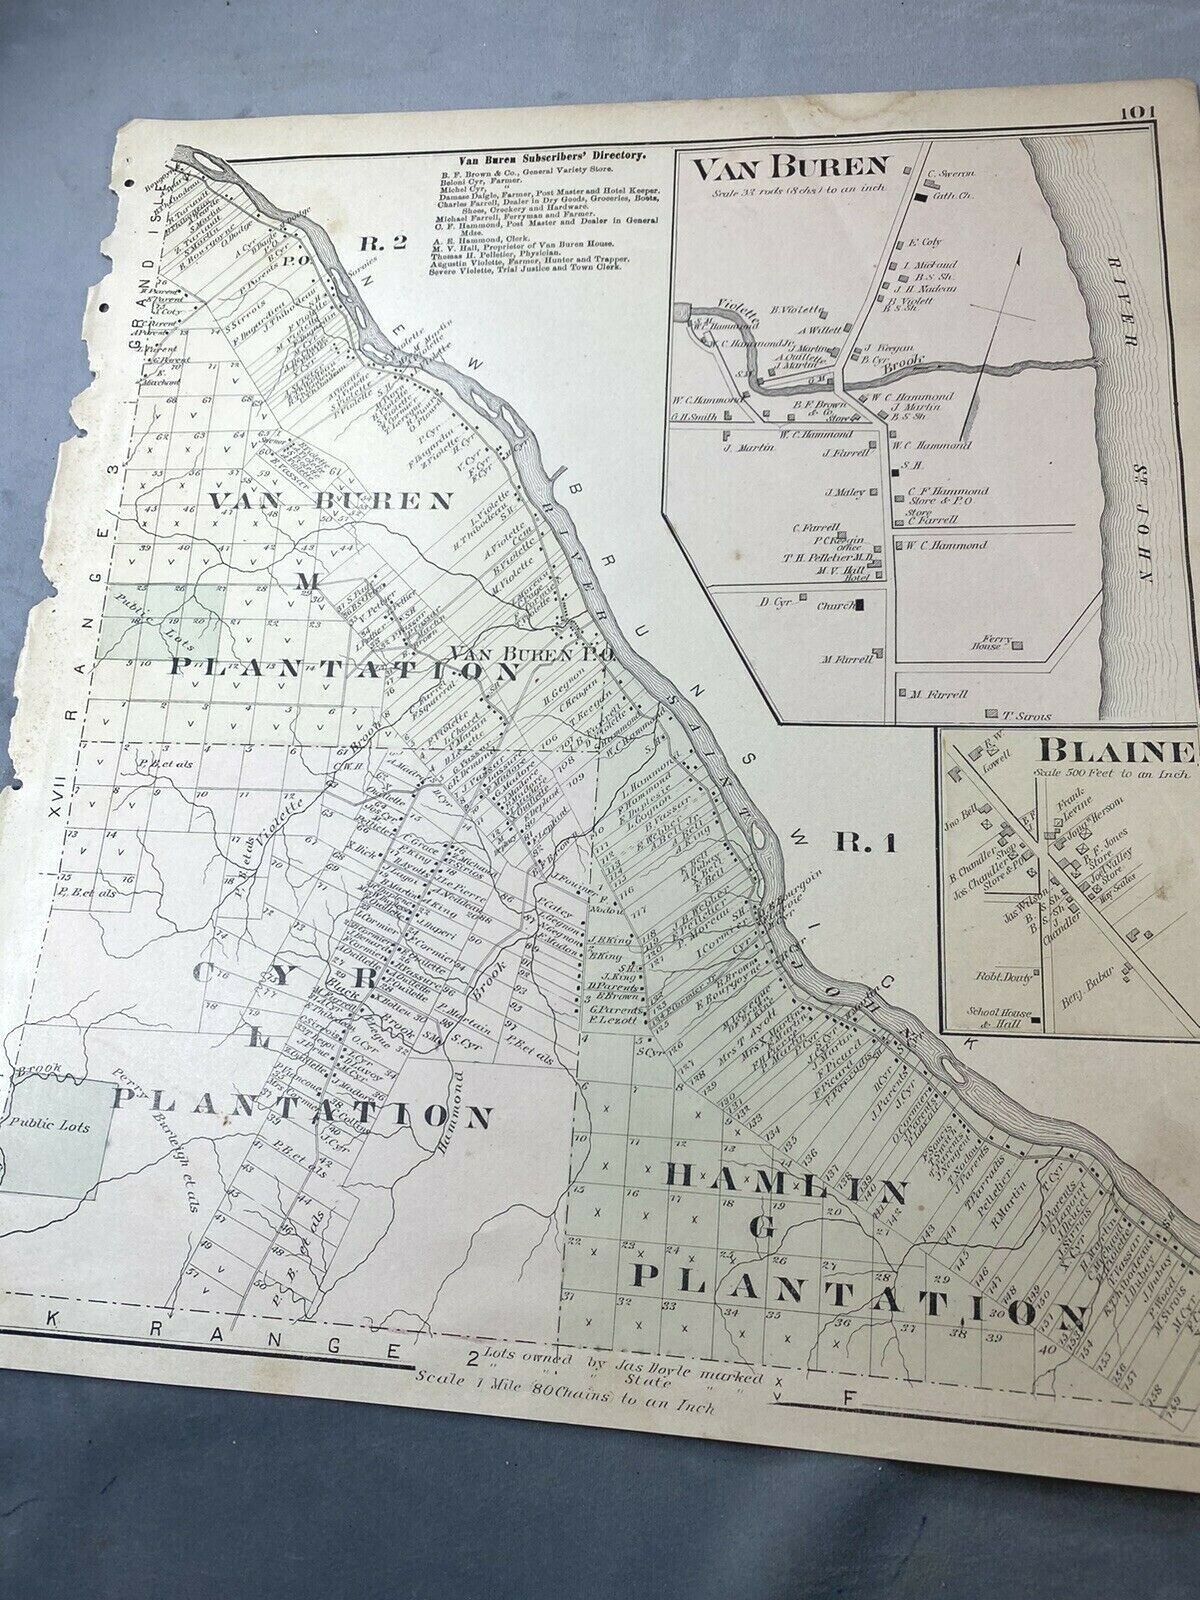 1877 Roe & Colby Maine Map, VAN BUREN, BLAINE, HAMLIN ~ PROPERTY OWNERS LISTED 